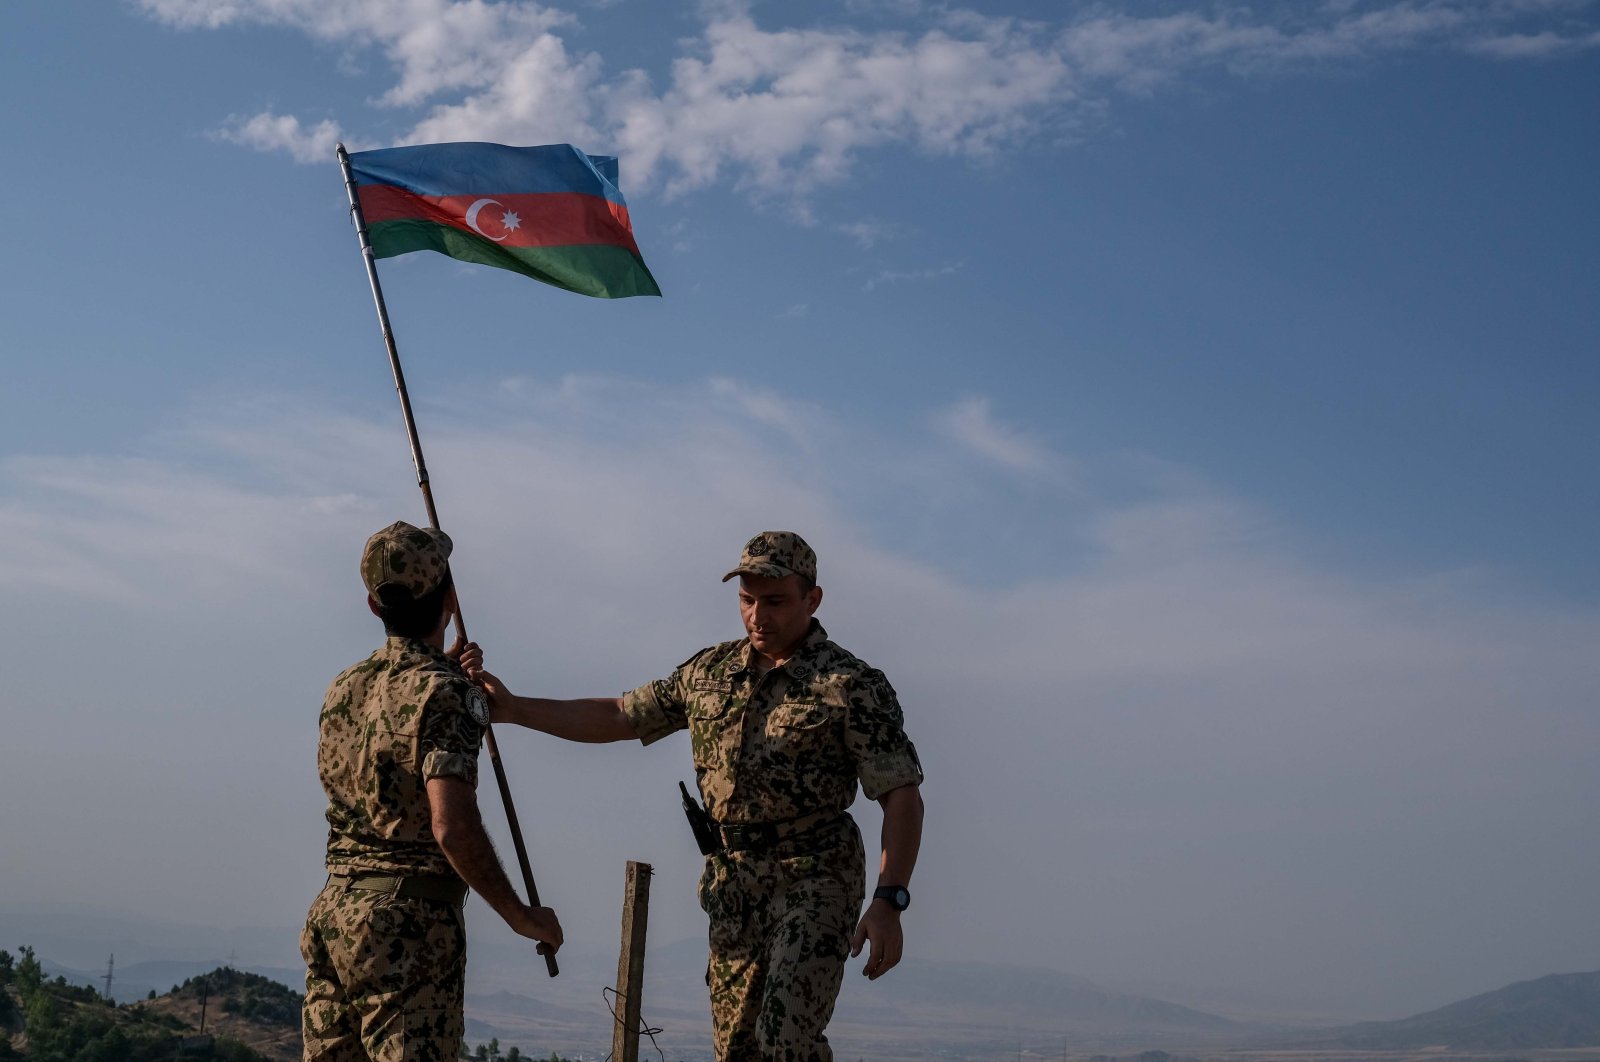 Two soldiers plant an Azerbaijani flag in the Shusha district of the Karabakh region after liberating it from Armenia in the 2020 Karabakh War, Azerbaijan, July 8, 2021. (Photo by Uğur Yıldırım)